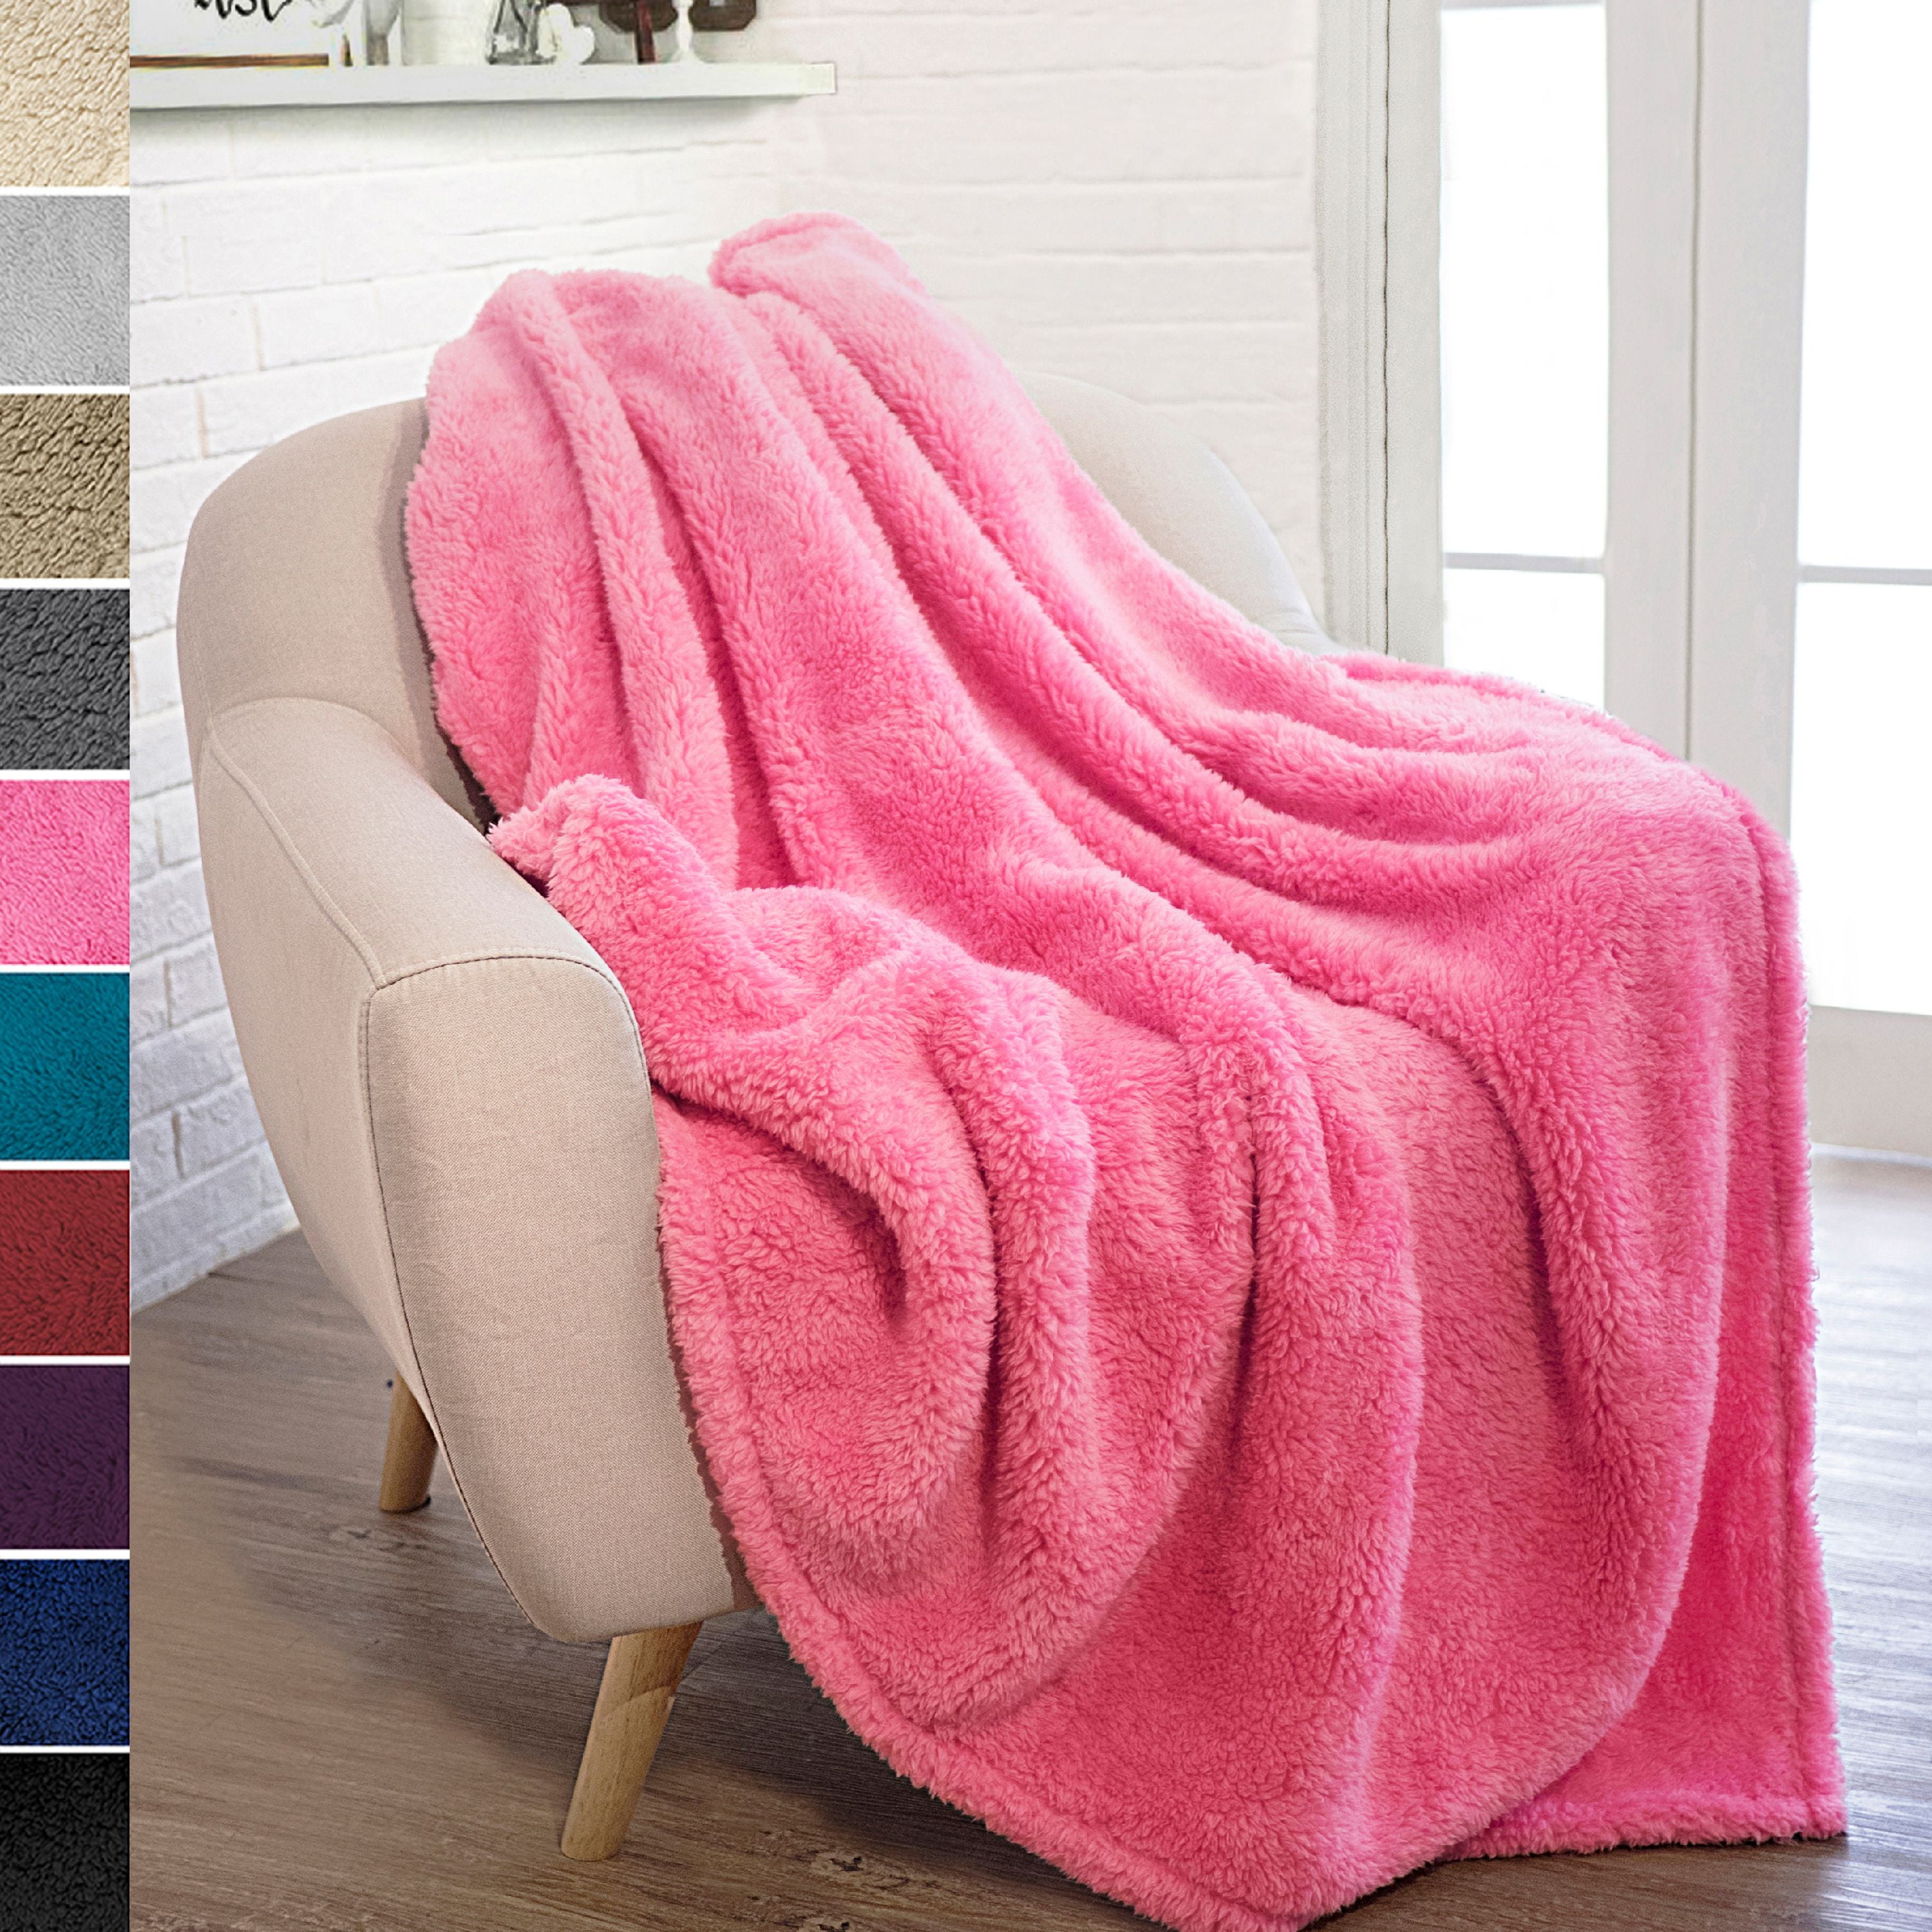 AUISS Plush Throw Velvet Blanket Cute Footprints Fluffy Fleece Carpet Living Room Lounging for Women Durable Sleep Mat Pad Flannel Cover for All Season 